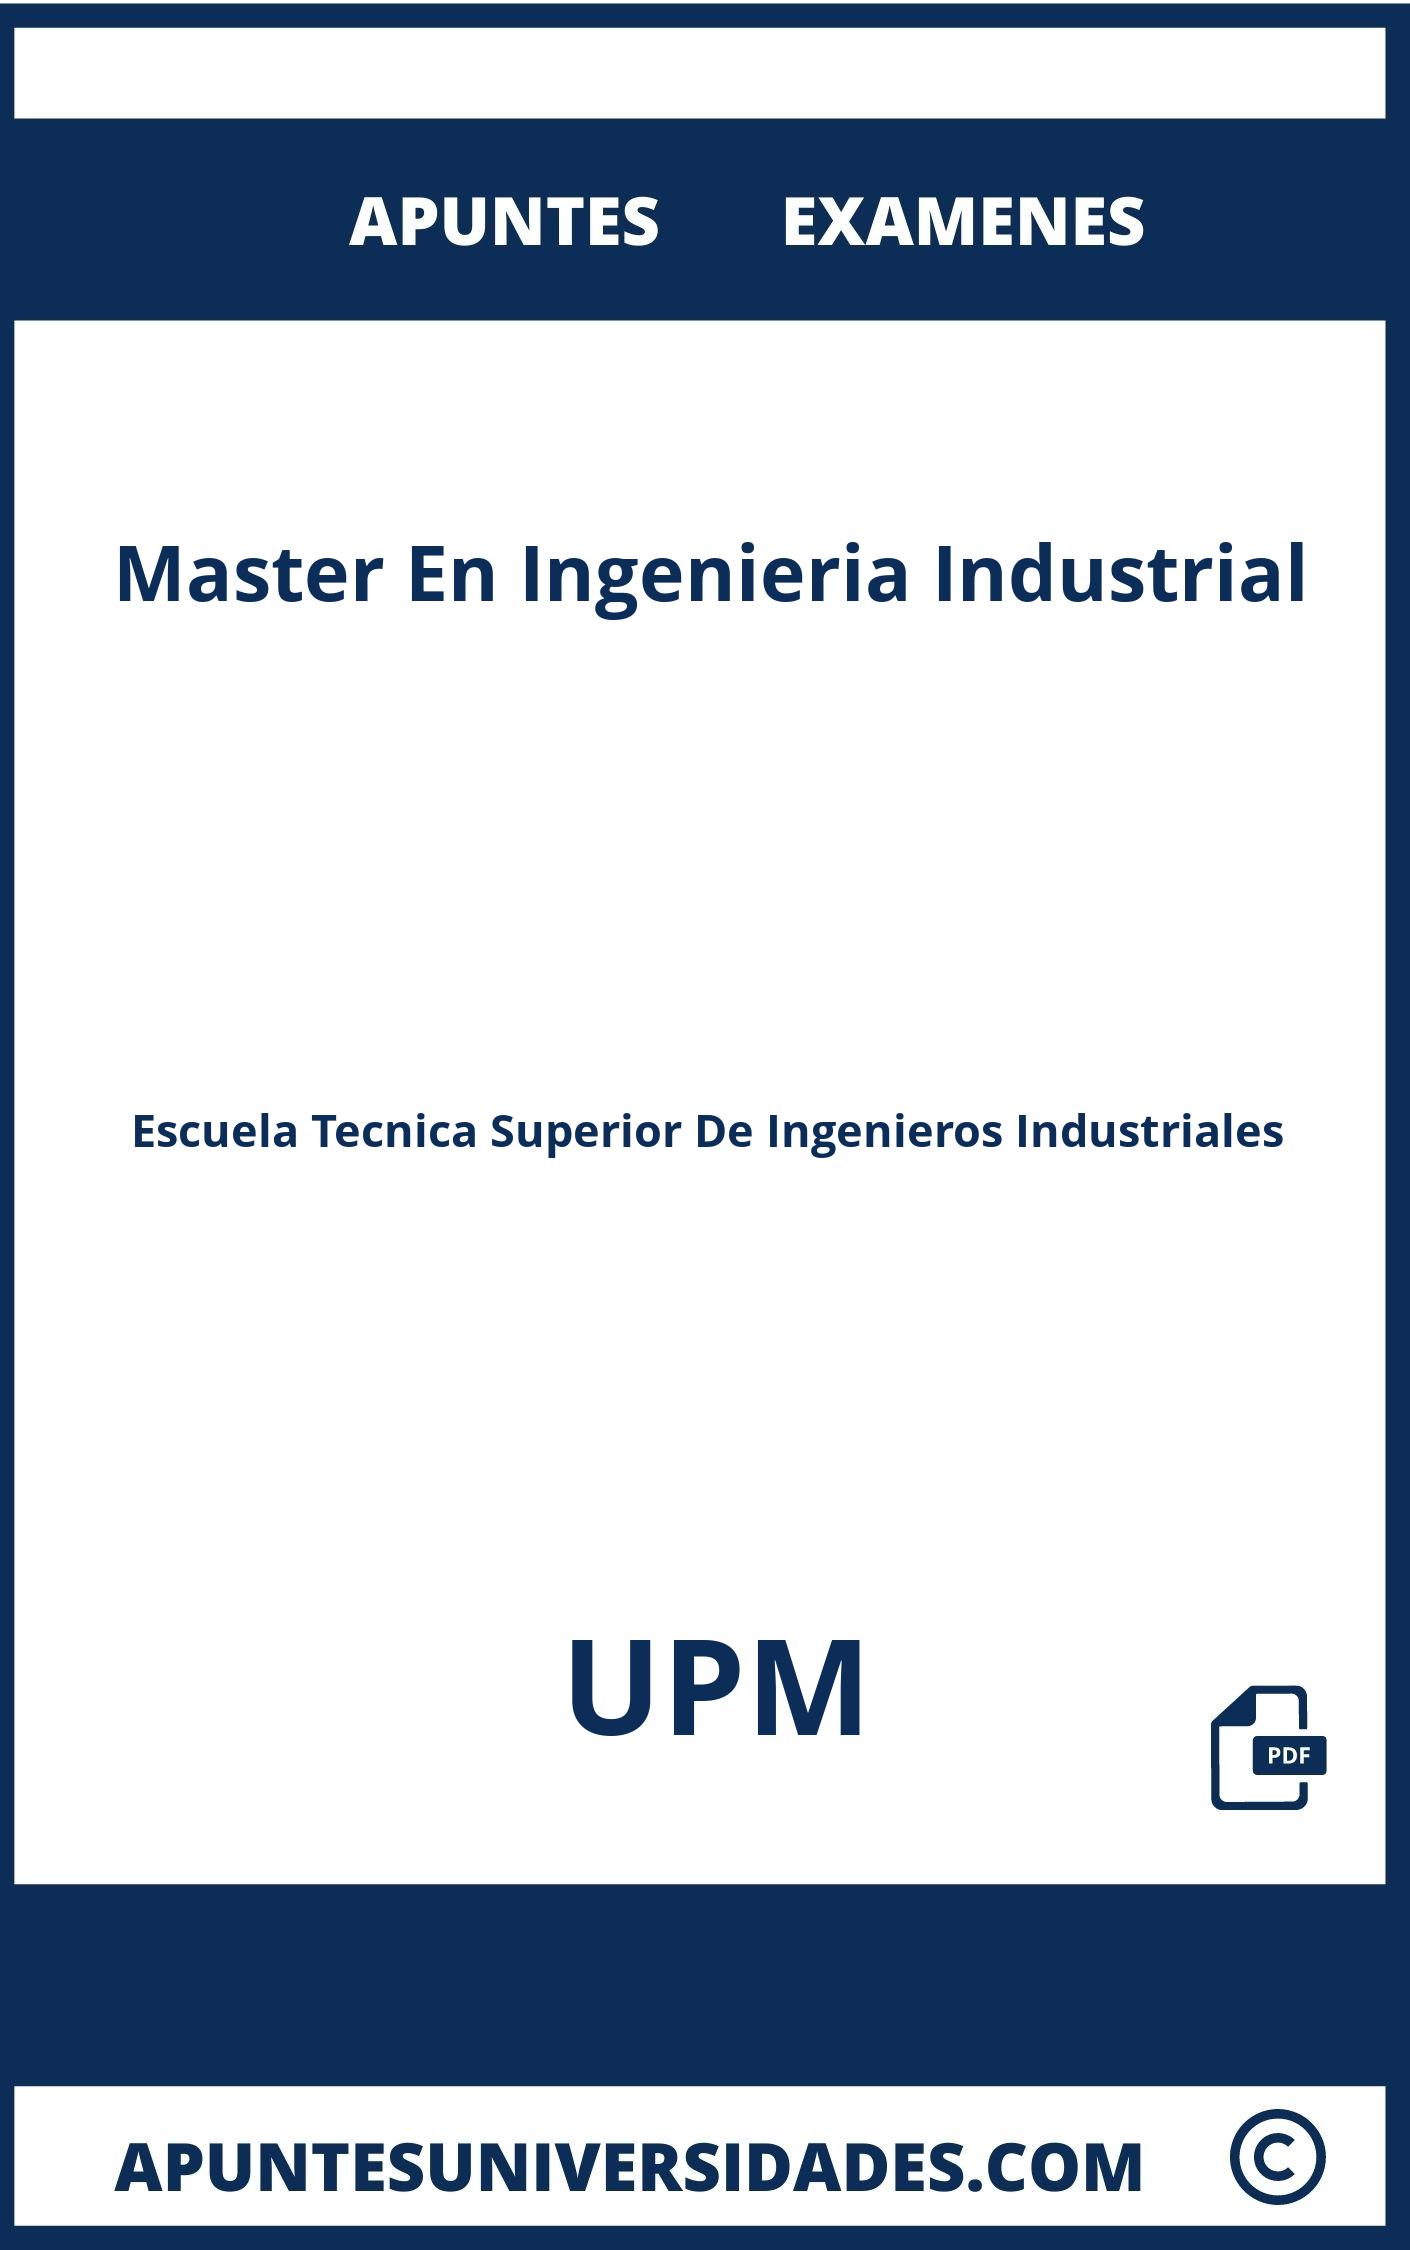 Master En Ingenieria Industrial UPM Apuntes Examenes